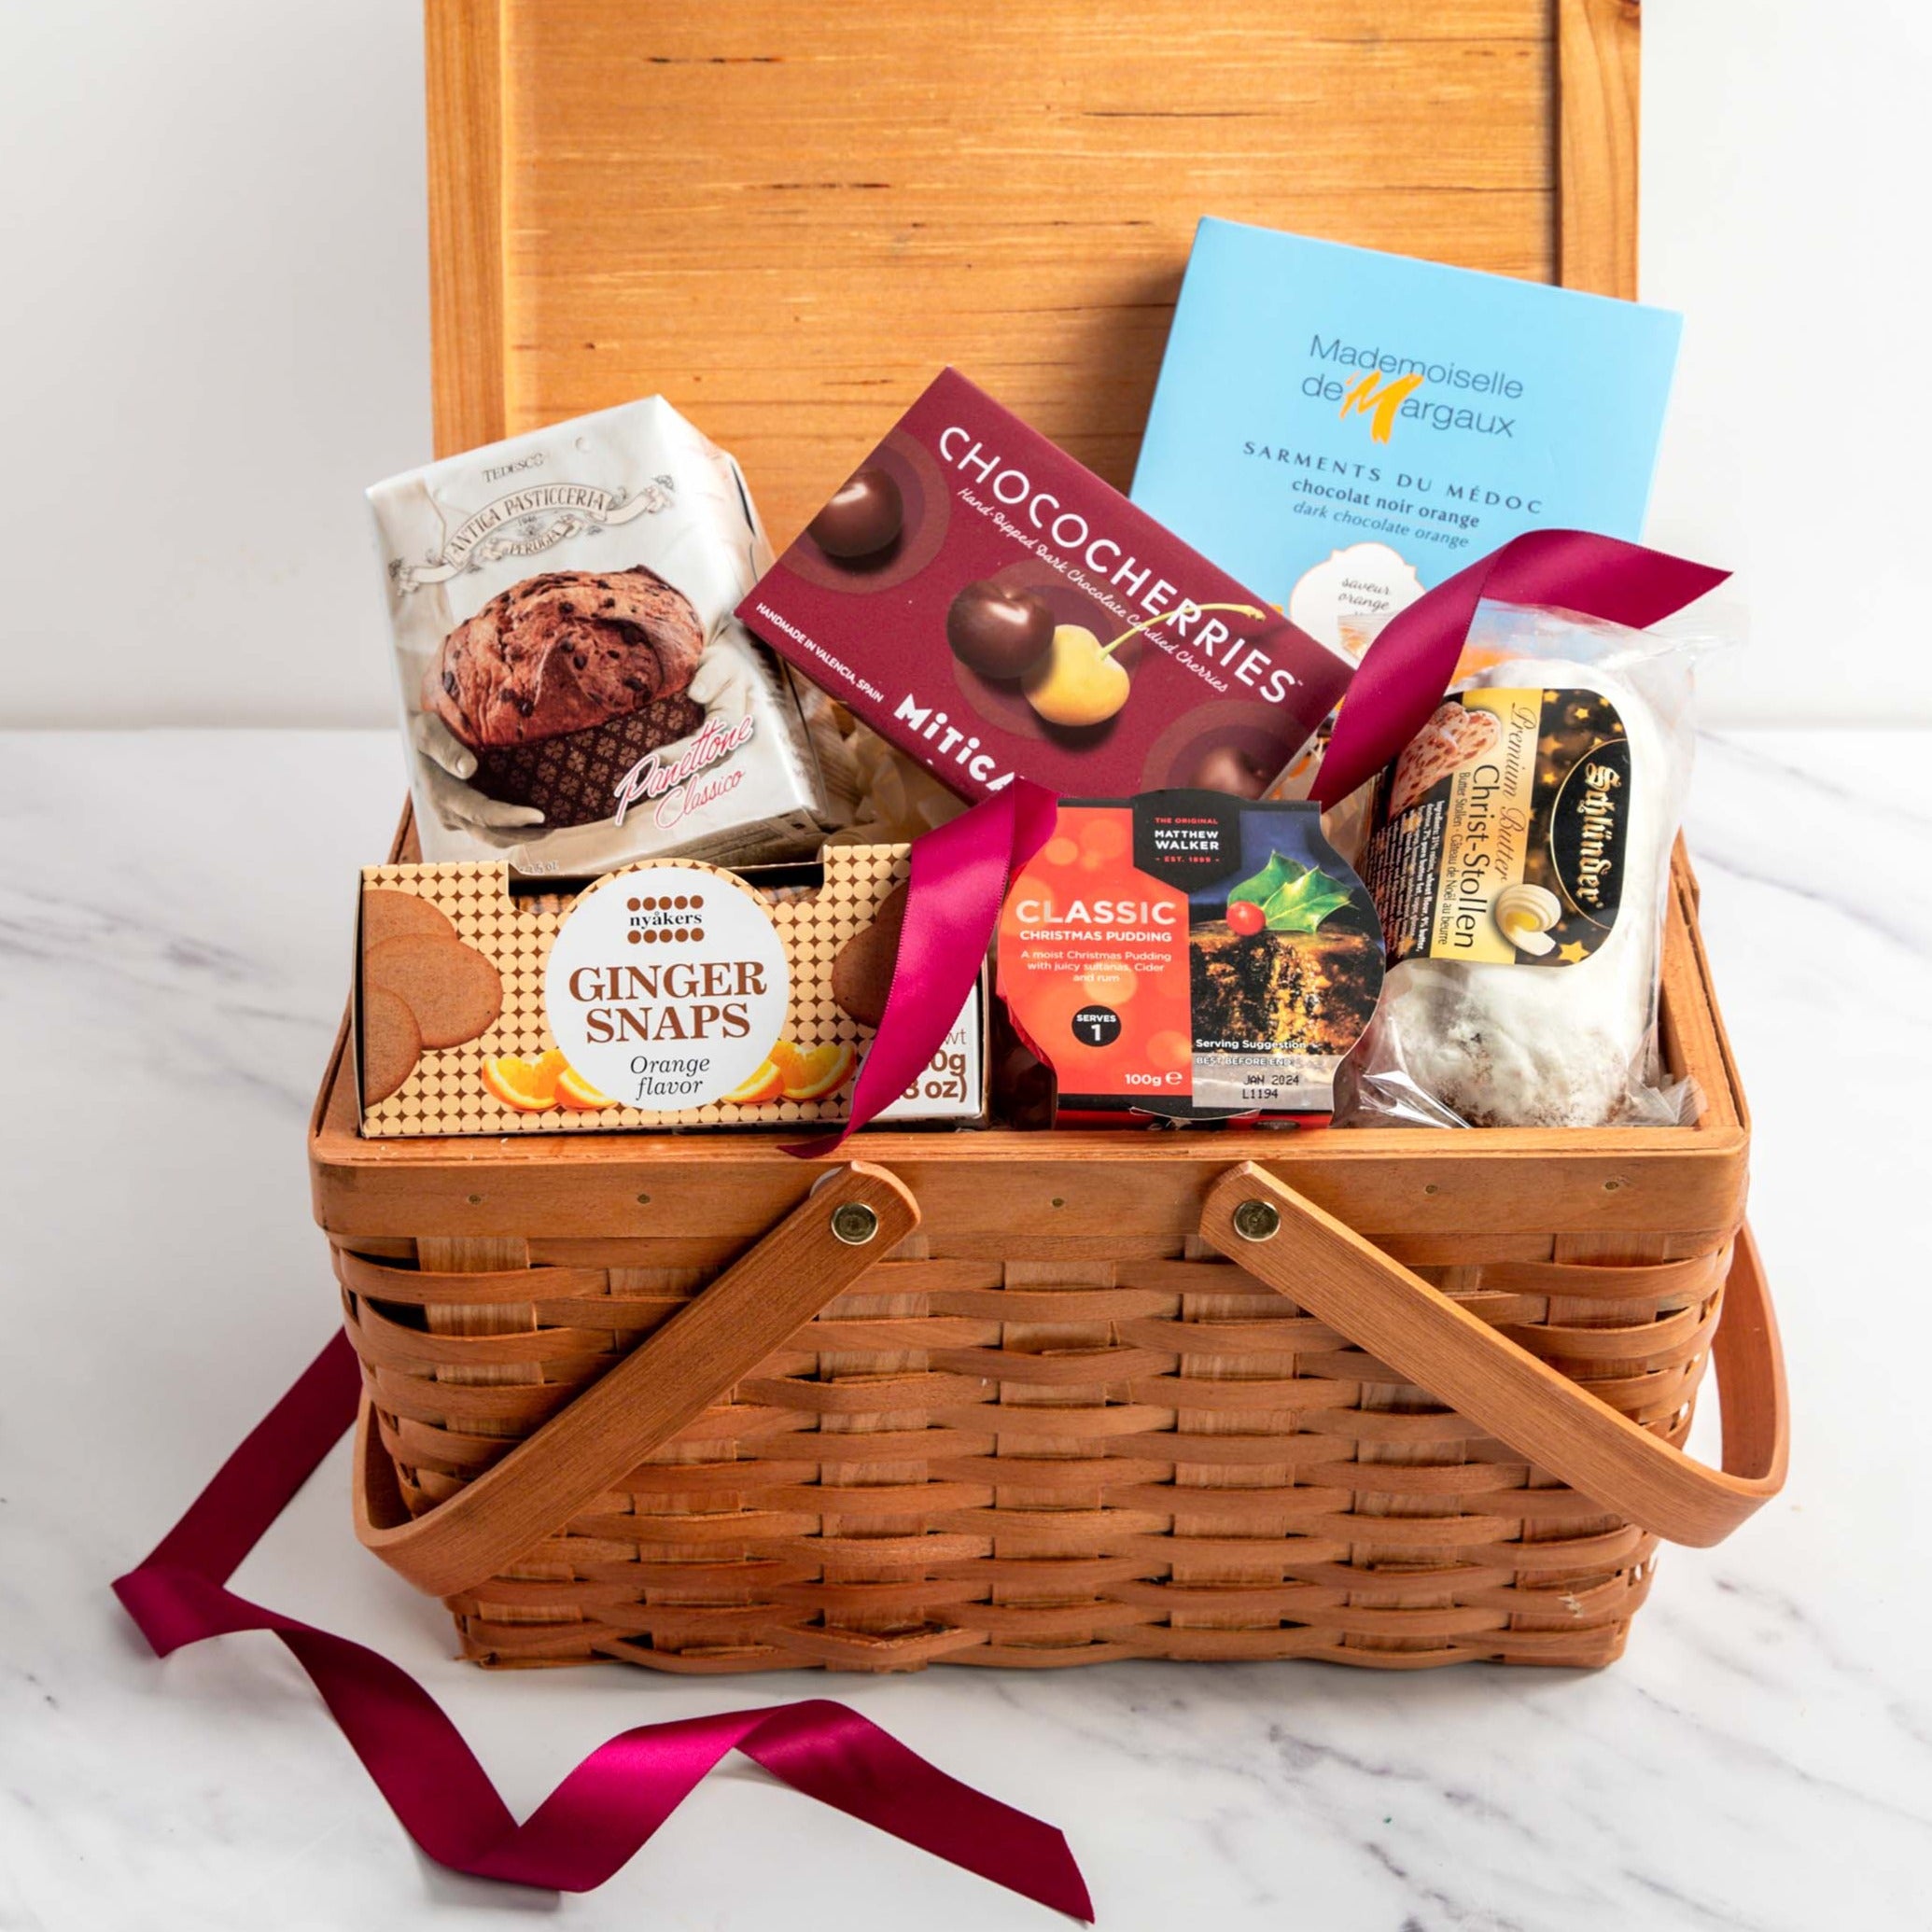 Igourmet Chocolate Lover's Classic Gourmet Gift Basket